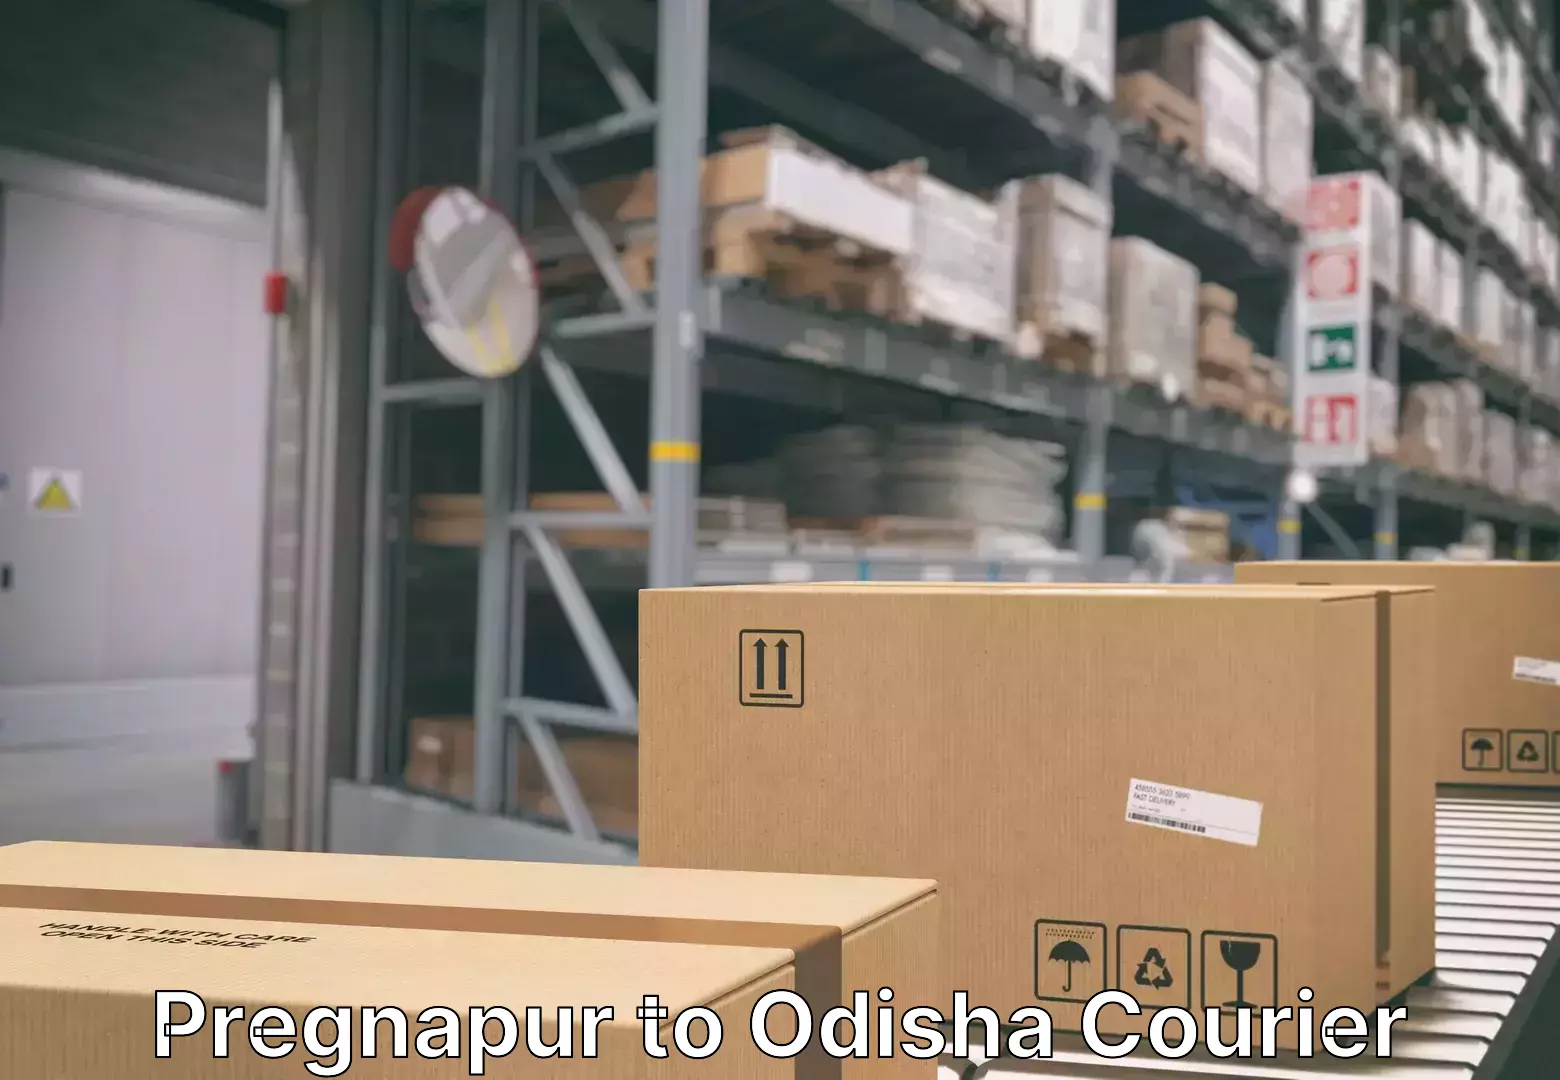 Expert goods movers Pregnapur to Odisha